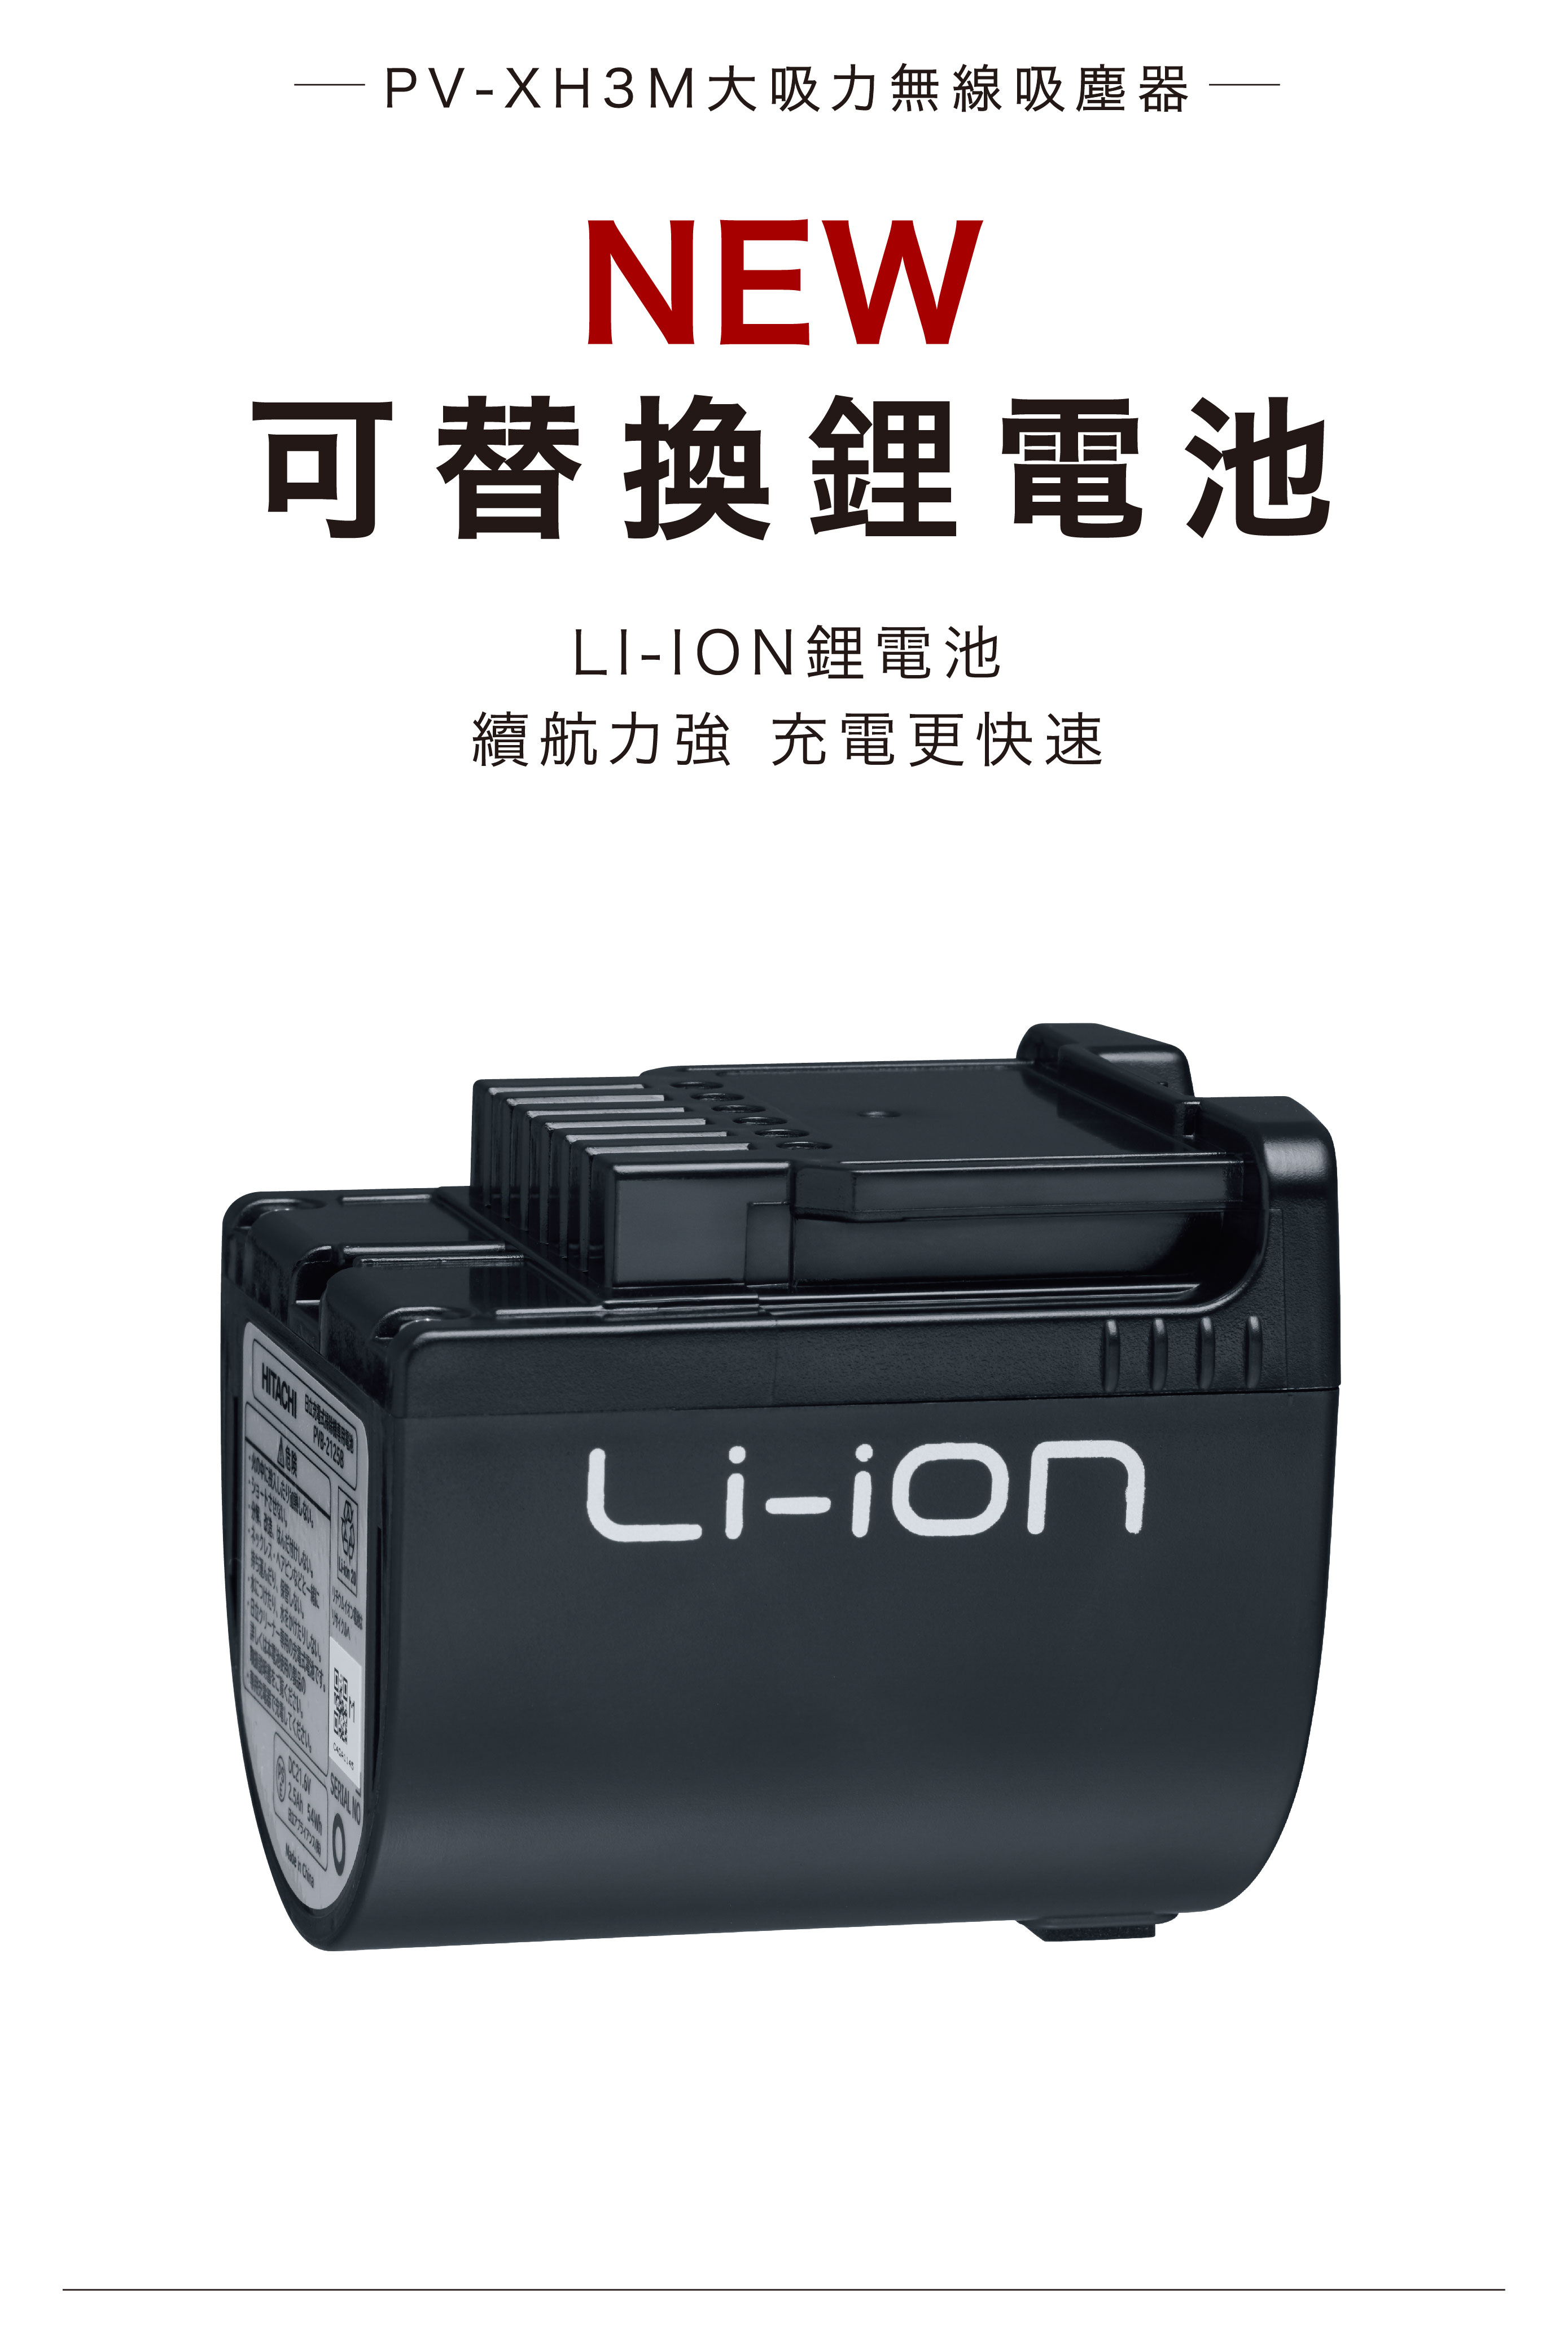 PVXH3M大吸力無線吸塵器NEW可替換鋰電池LI-ION鋰電池續航力強 充電更快速   in Li-ion